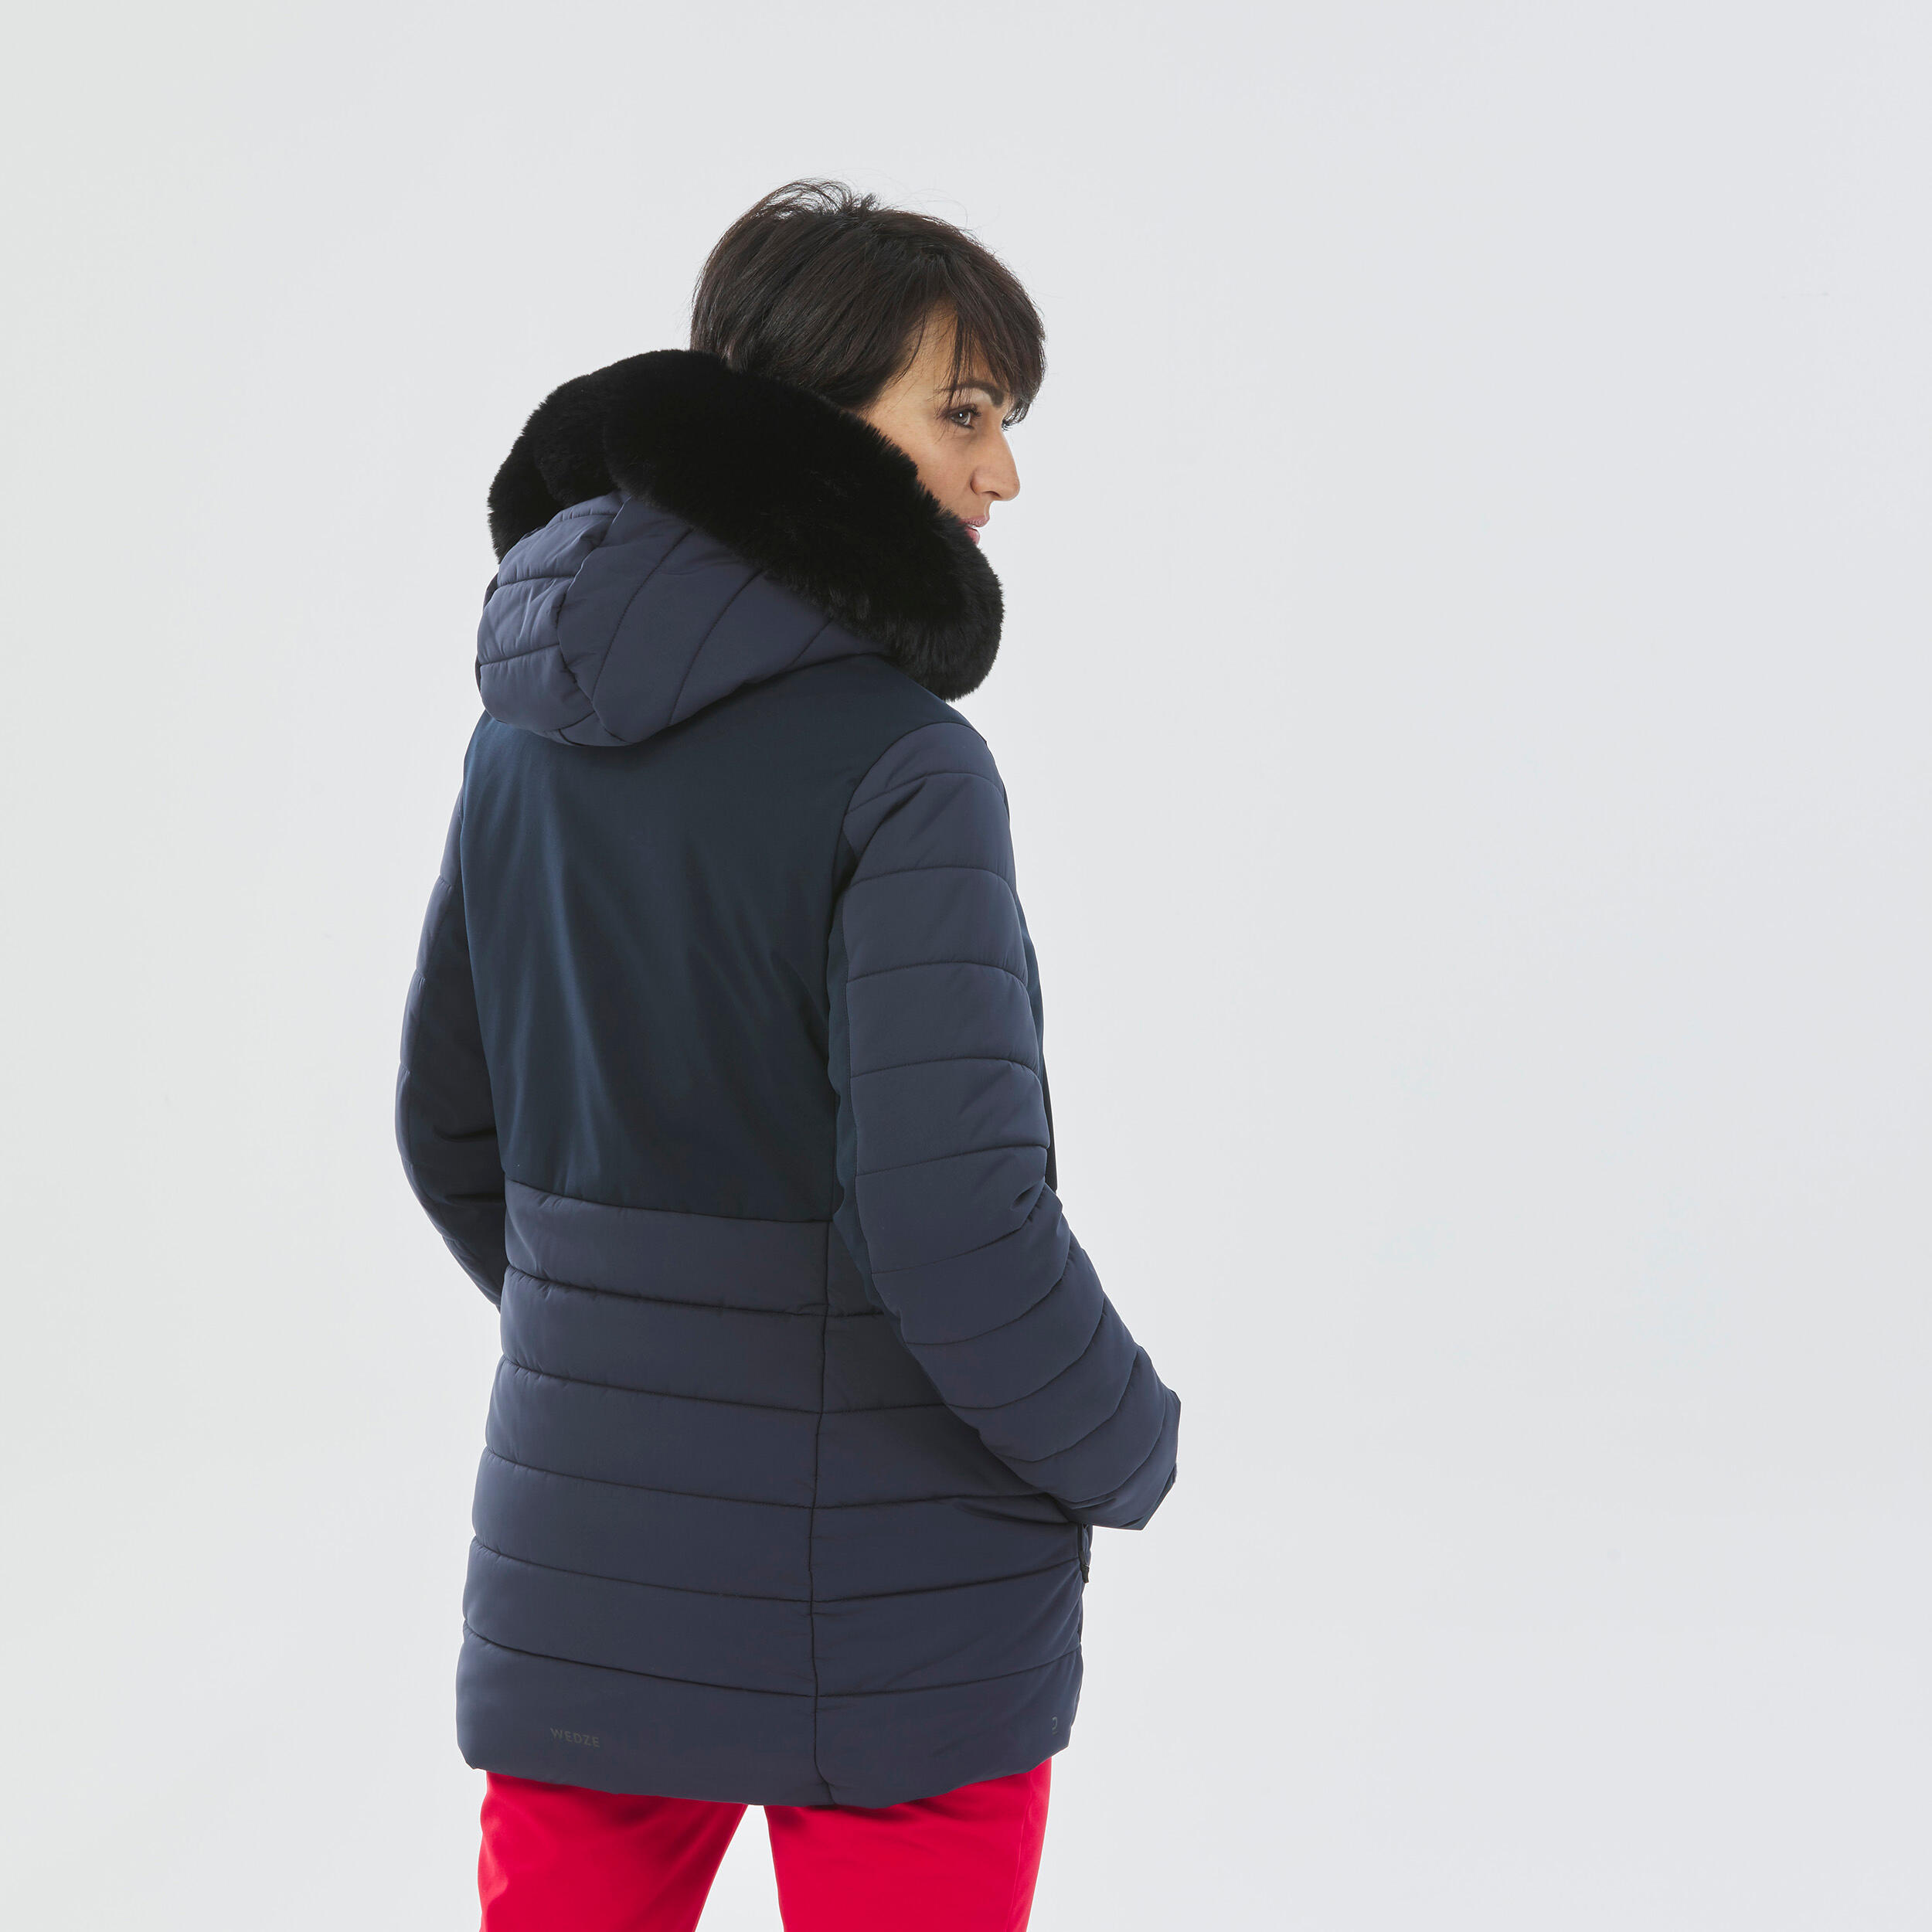 Women’s Mid-Length Warm Ski Jacket 100 - Navy Blue 5/12